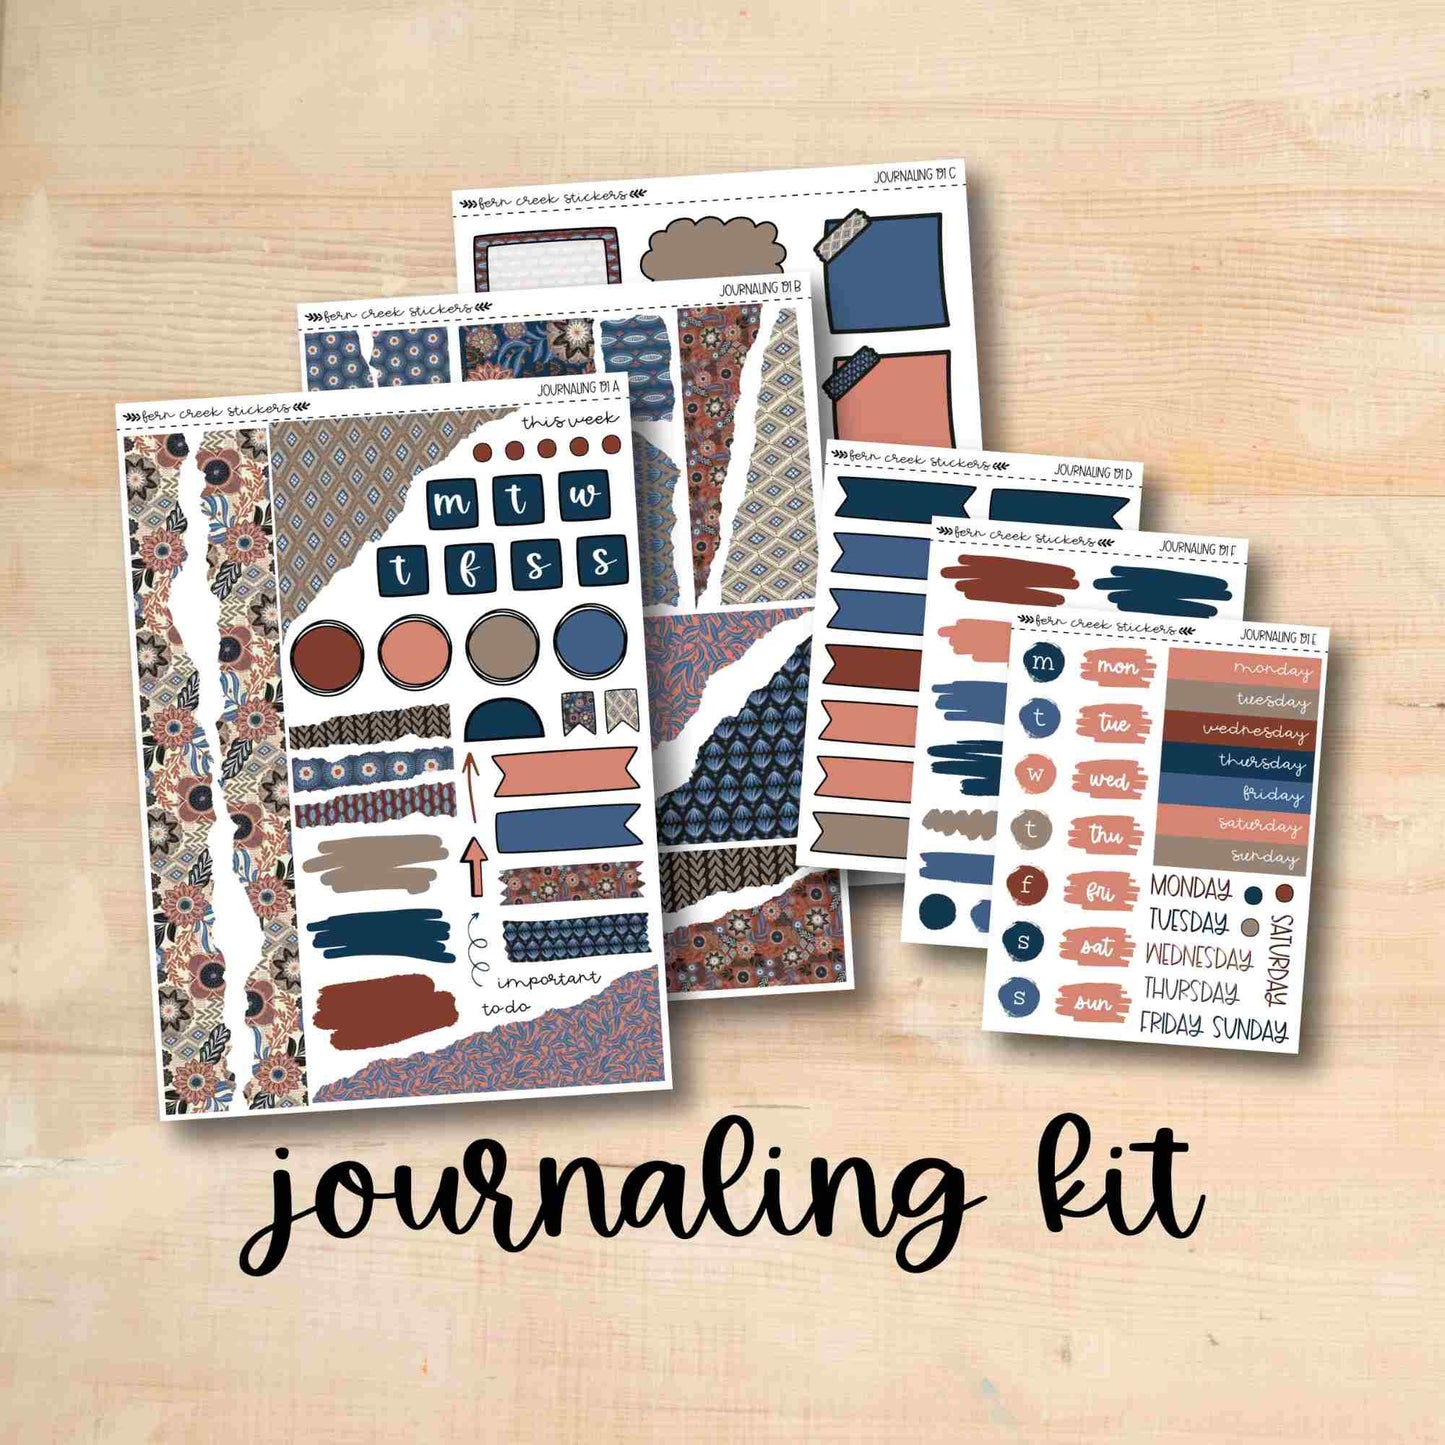 JOURN191 || BIG DREAMS Journaling Kit